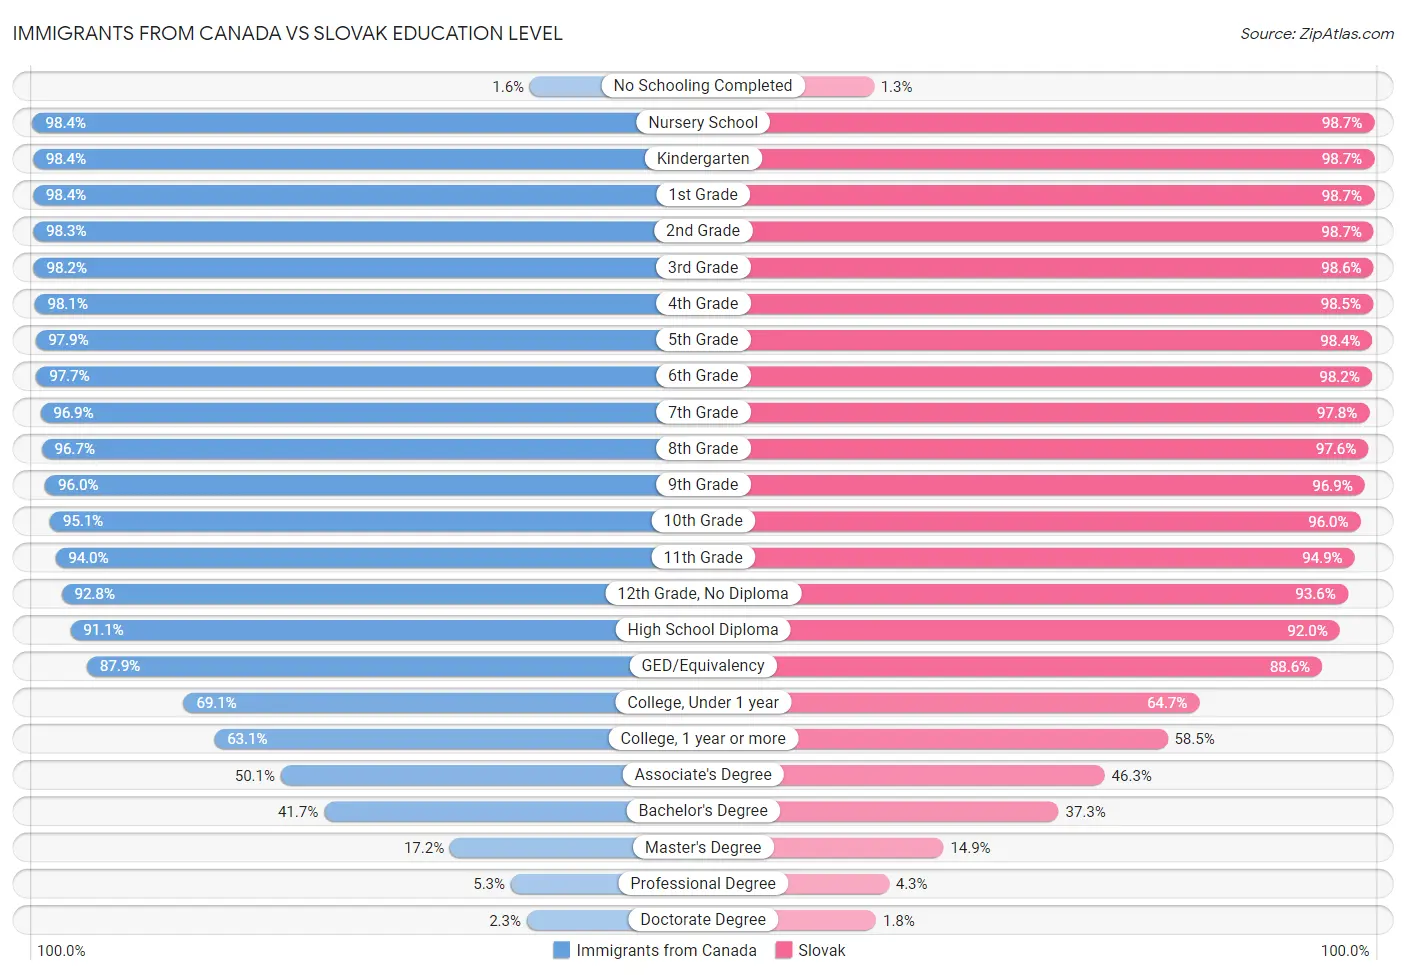 Immigrants from Canada vs Slovak Education Level